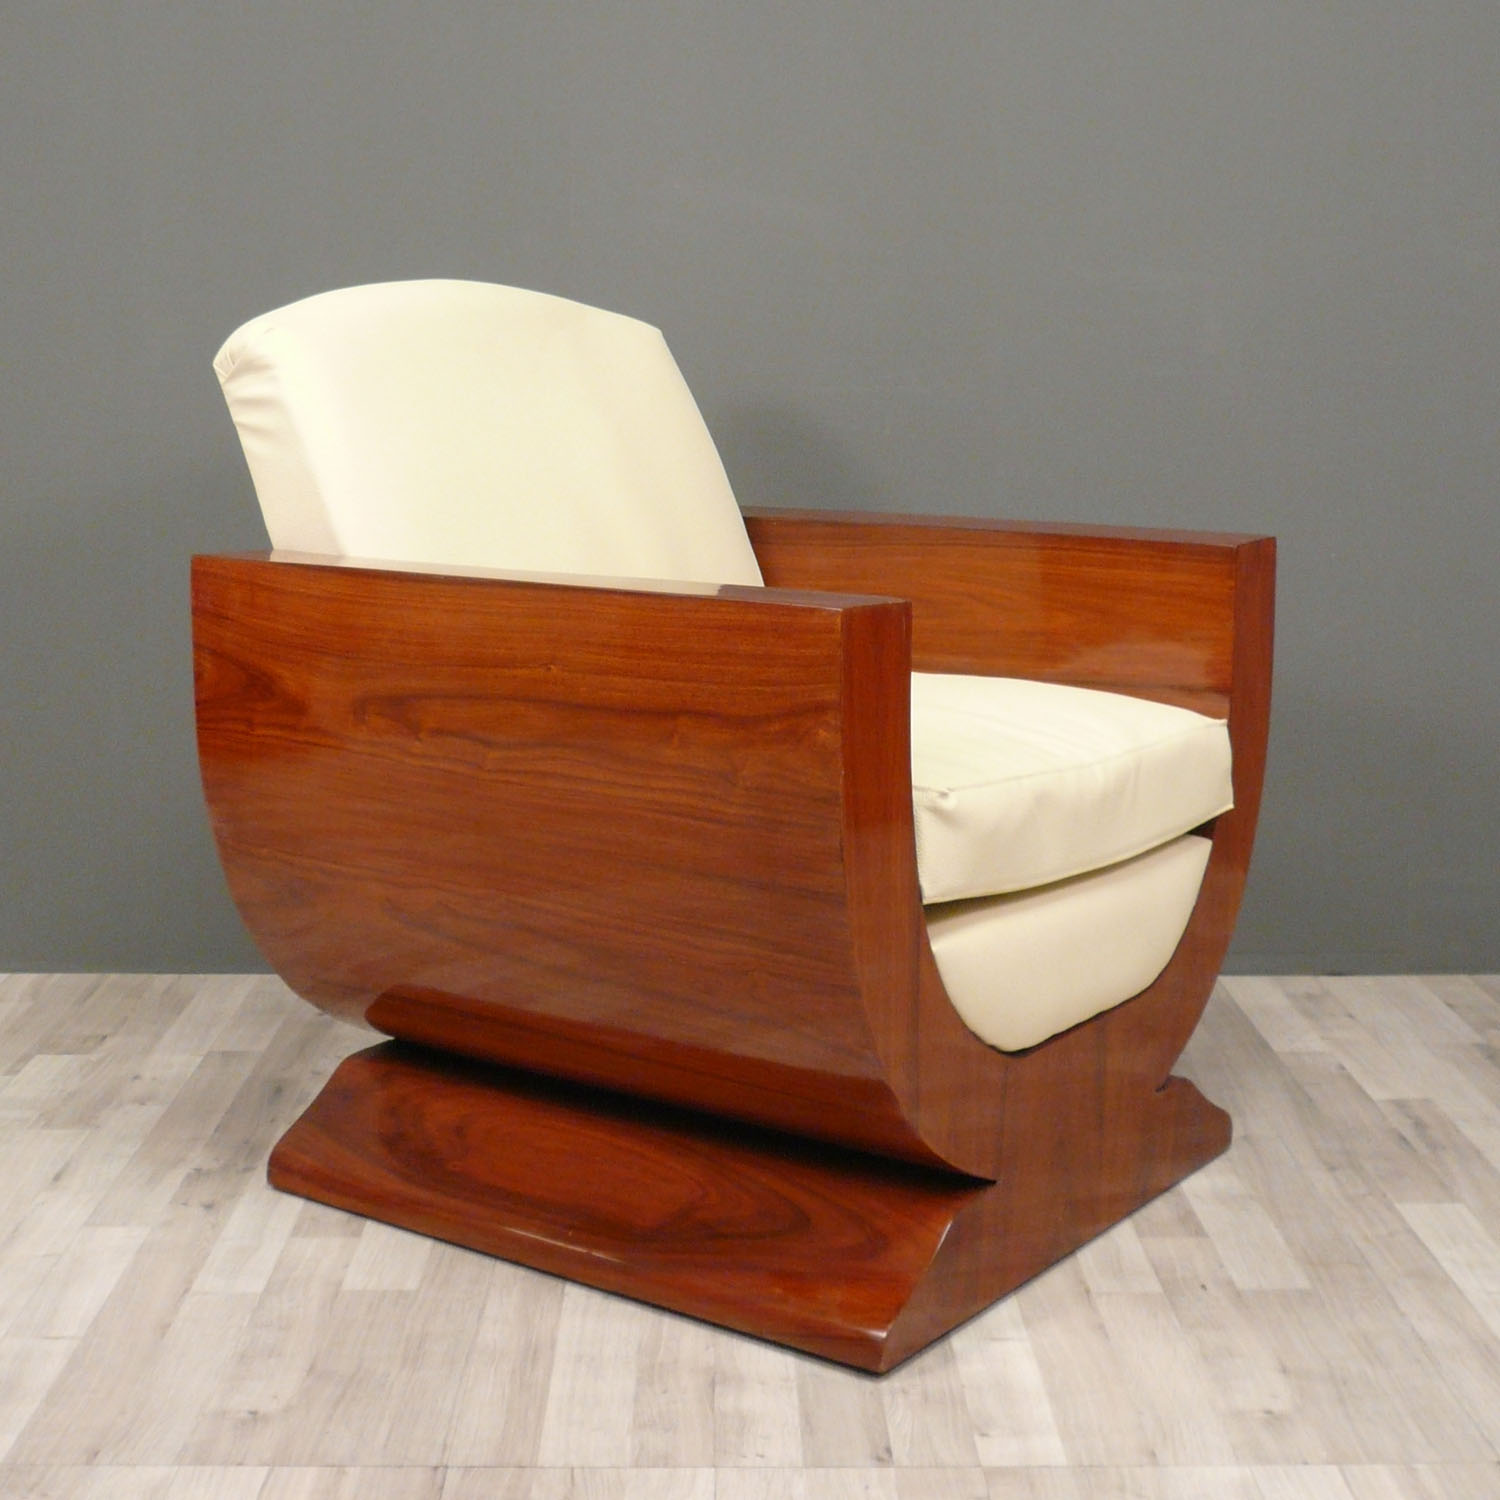 Elegant General : Pair Of Armchairs Art Deco Art Deco Furniture ~ Resourcedir art deco furniture style